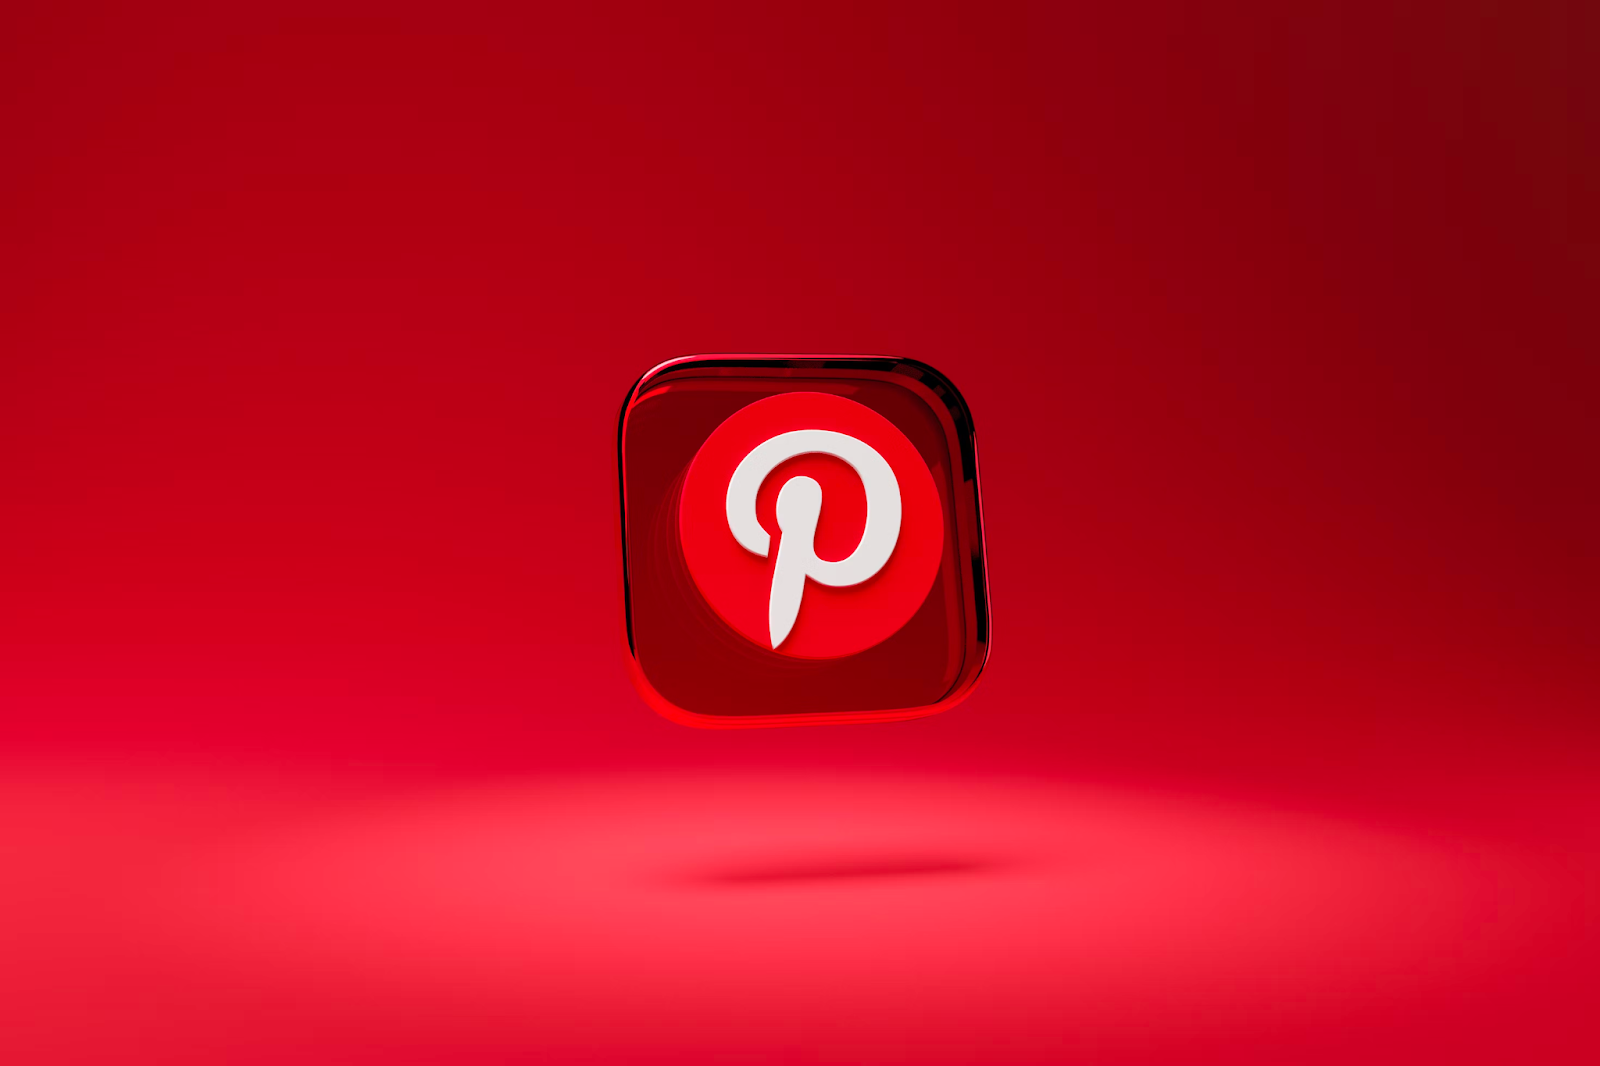 Logo of the social media platform Pinterest in a red background